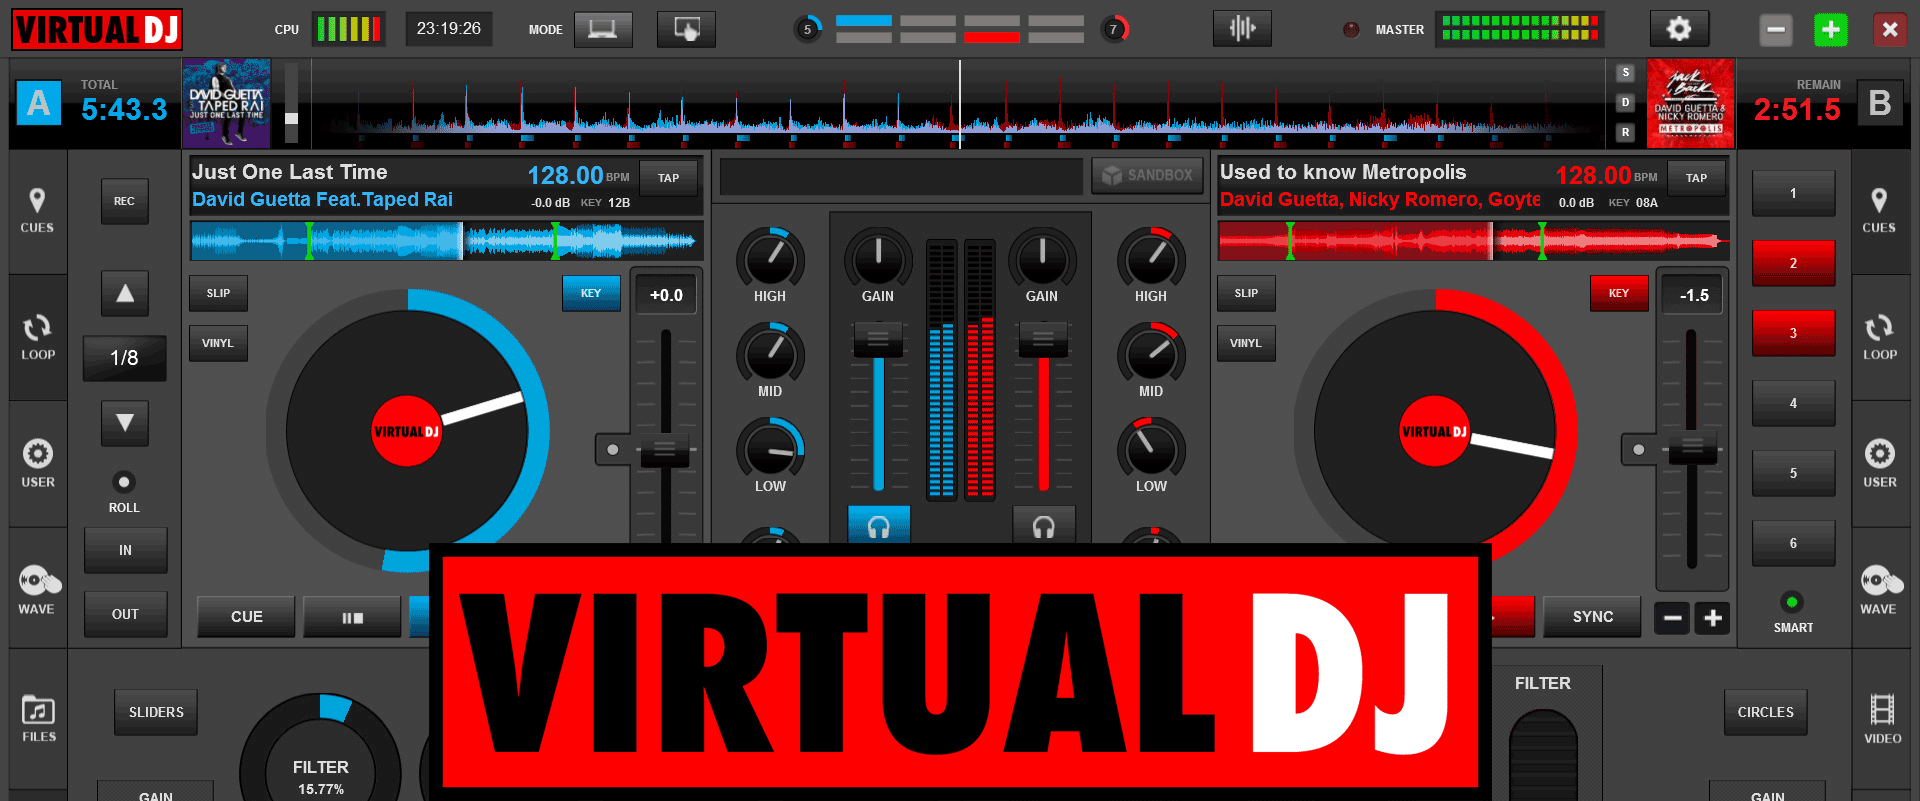 Virtual dj for mac crack